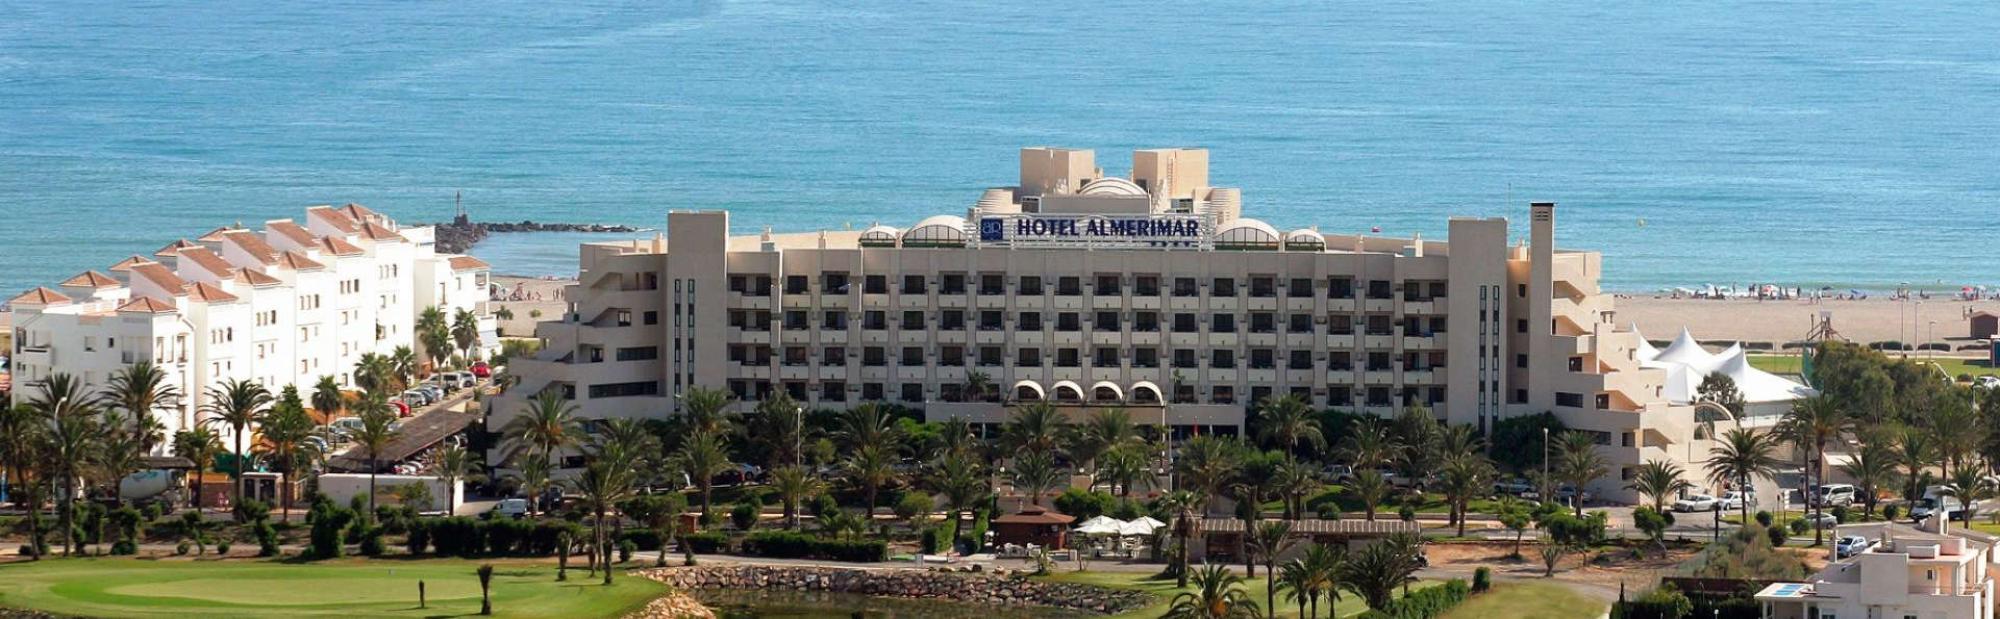 The Hotel Golf Almerimar's picturesque hotel in stunning Costa Almeria.